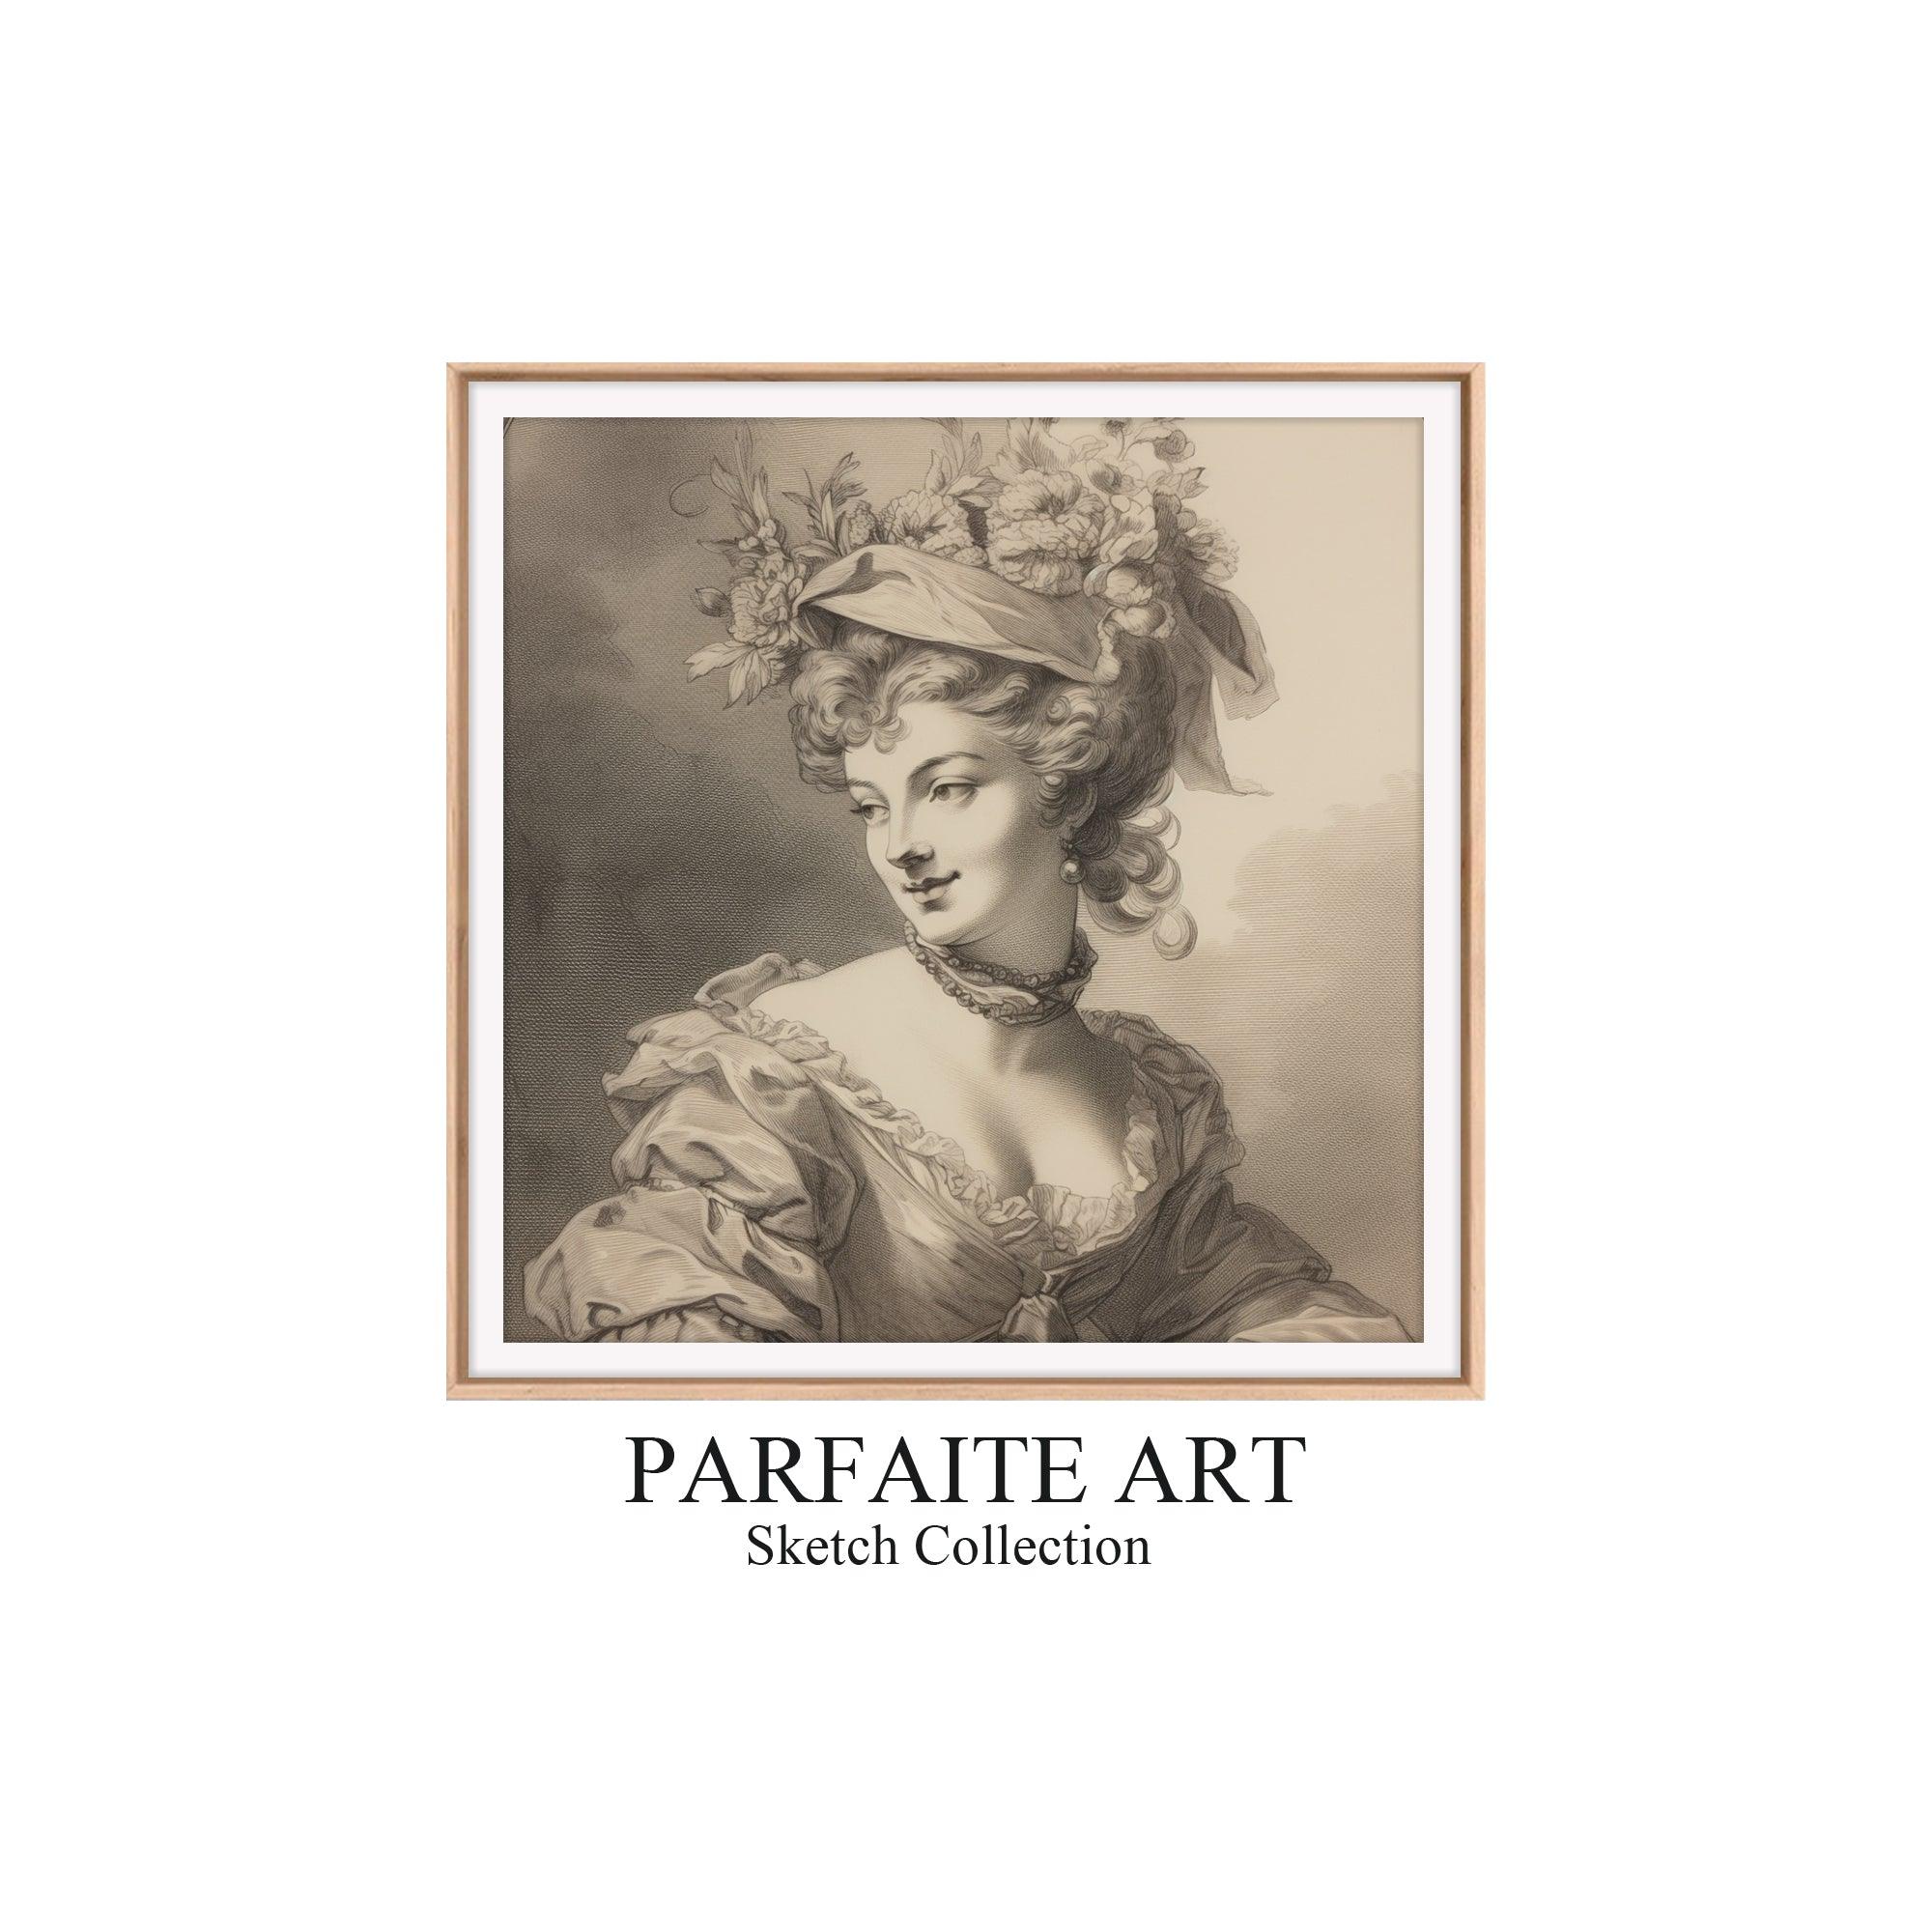 Classical Woman Portrait | Vintage Wall Art |Sketch etching printing |Moody Wall Decor |Home Decor Aesthetics|PRINTABLE Art |Digital Download